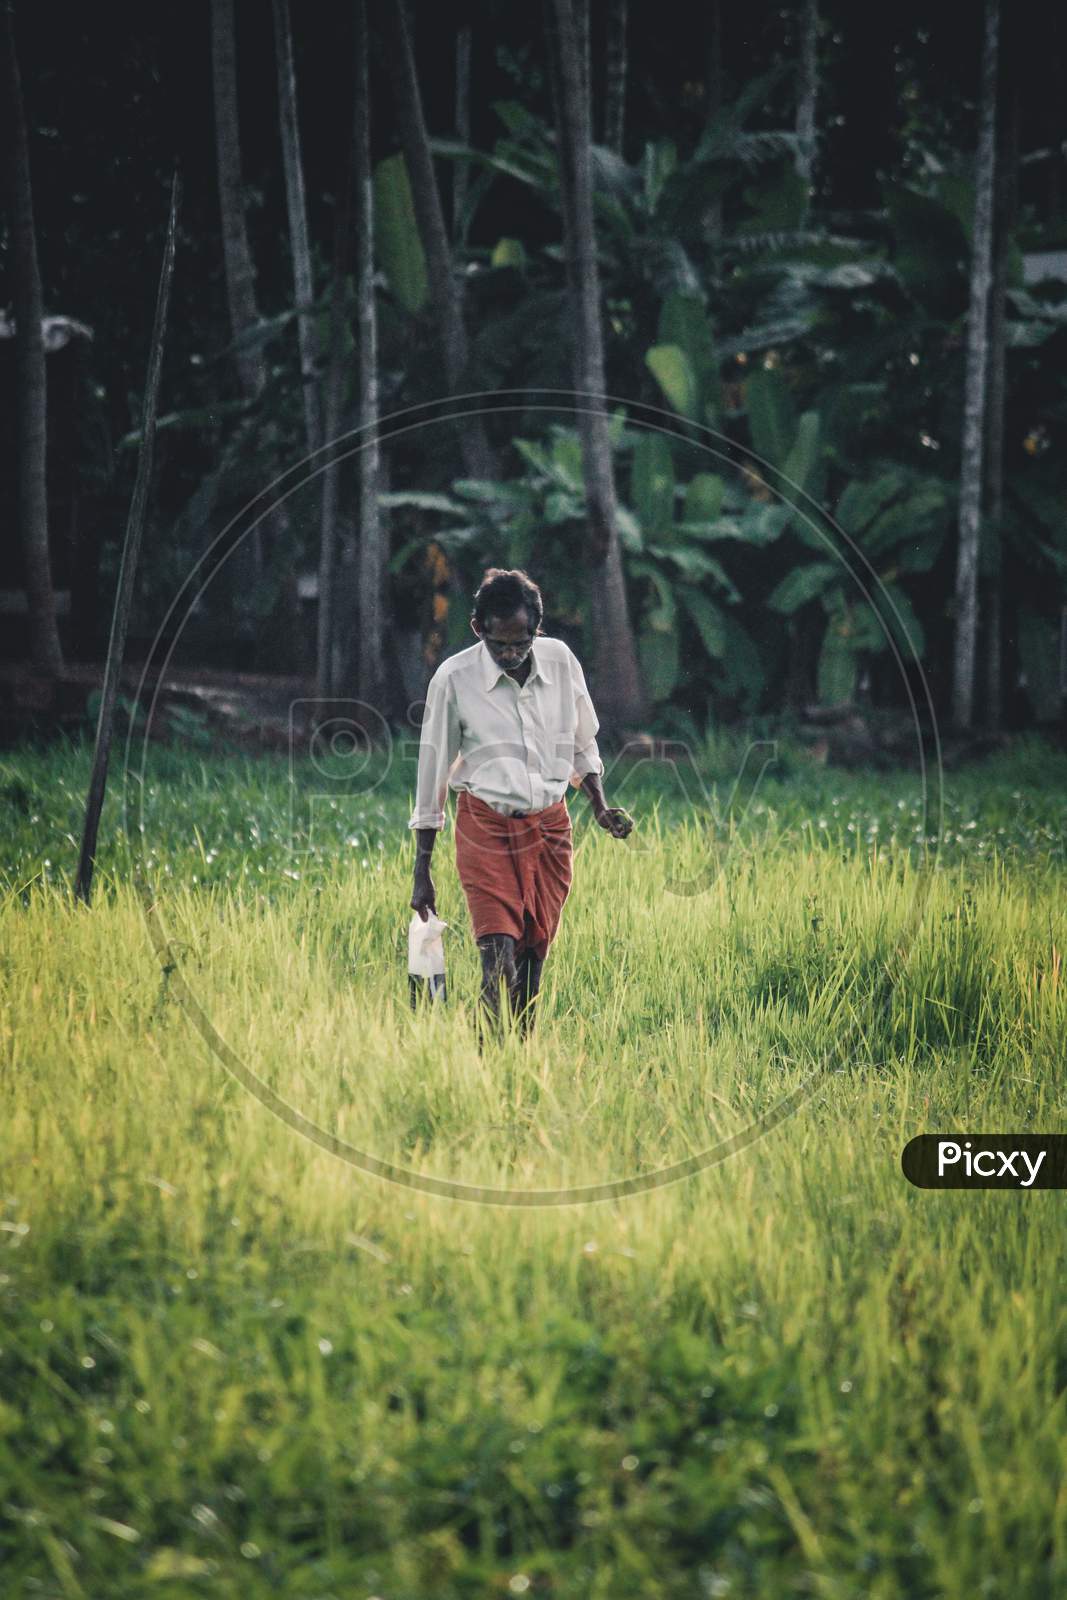 A farmer walking through a paddy field in Kerala